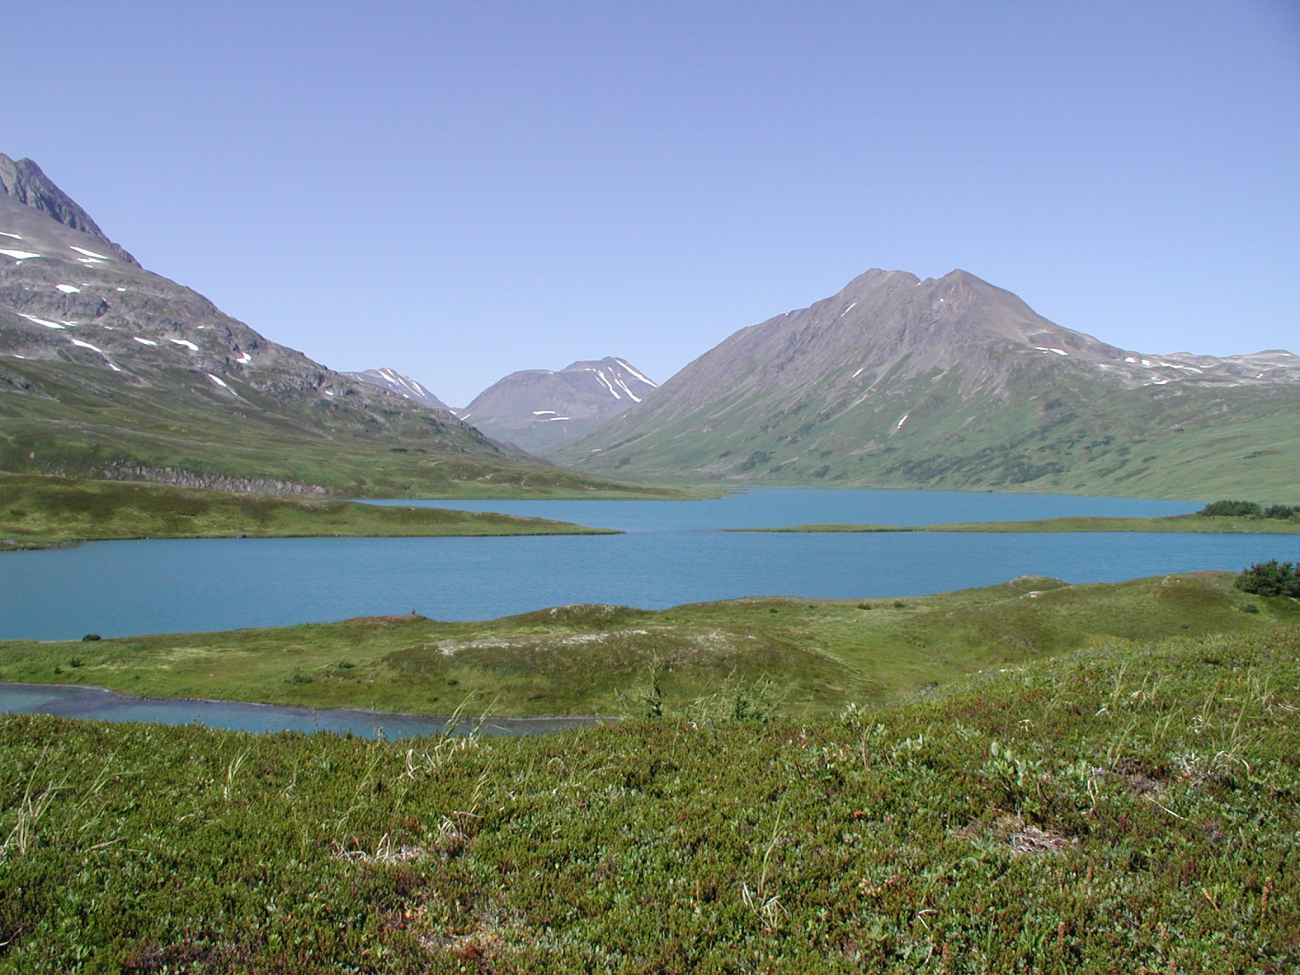 On the Alaska Peninsula in the vicinity of Kuiutka Bay